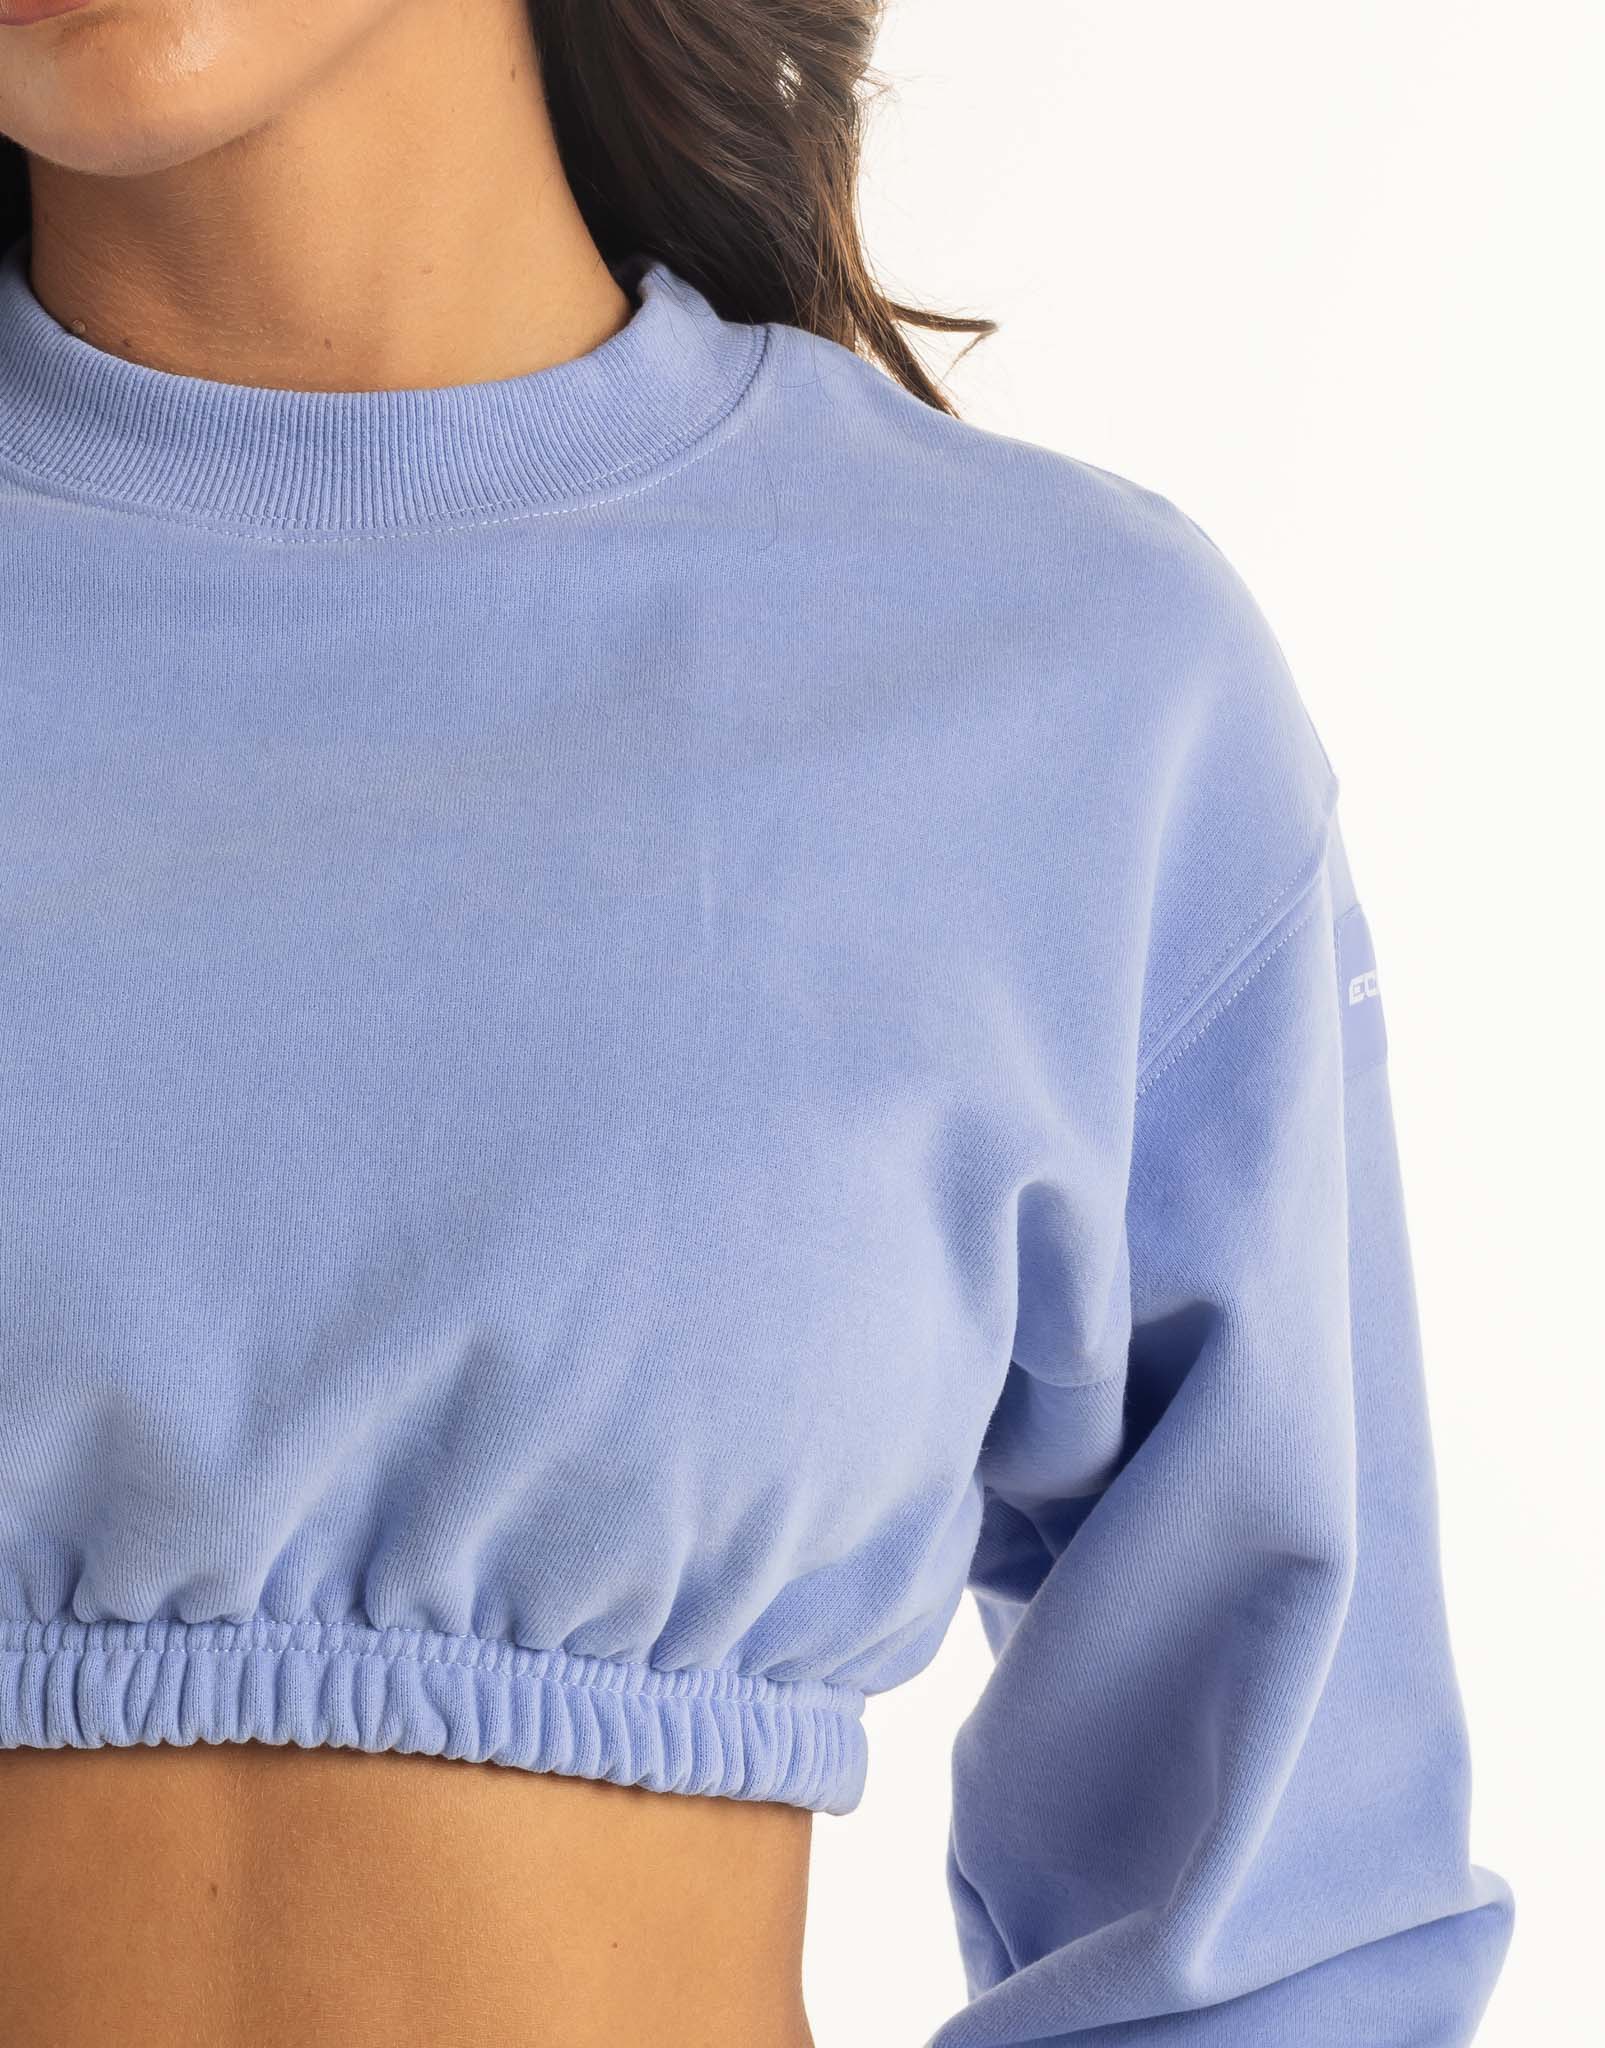 Esteem Cropped Sweater - Hydrangea Blue